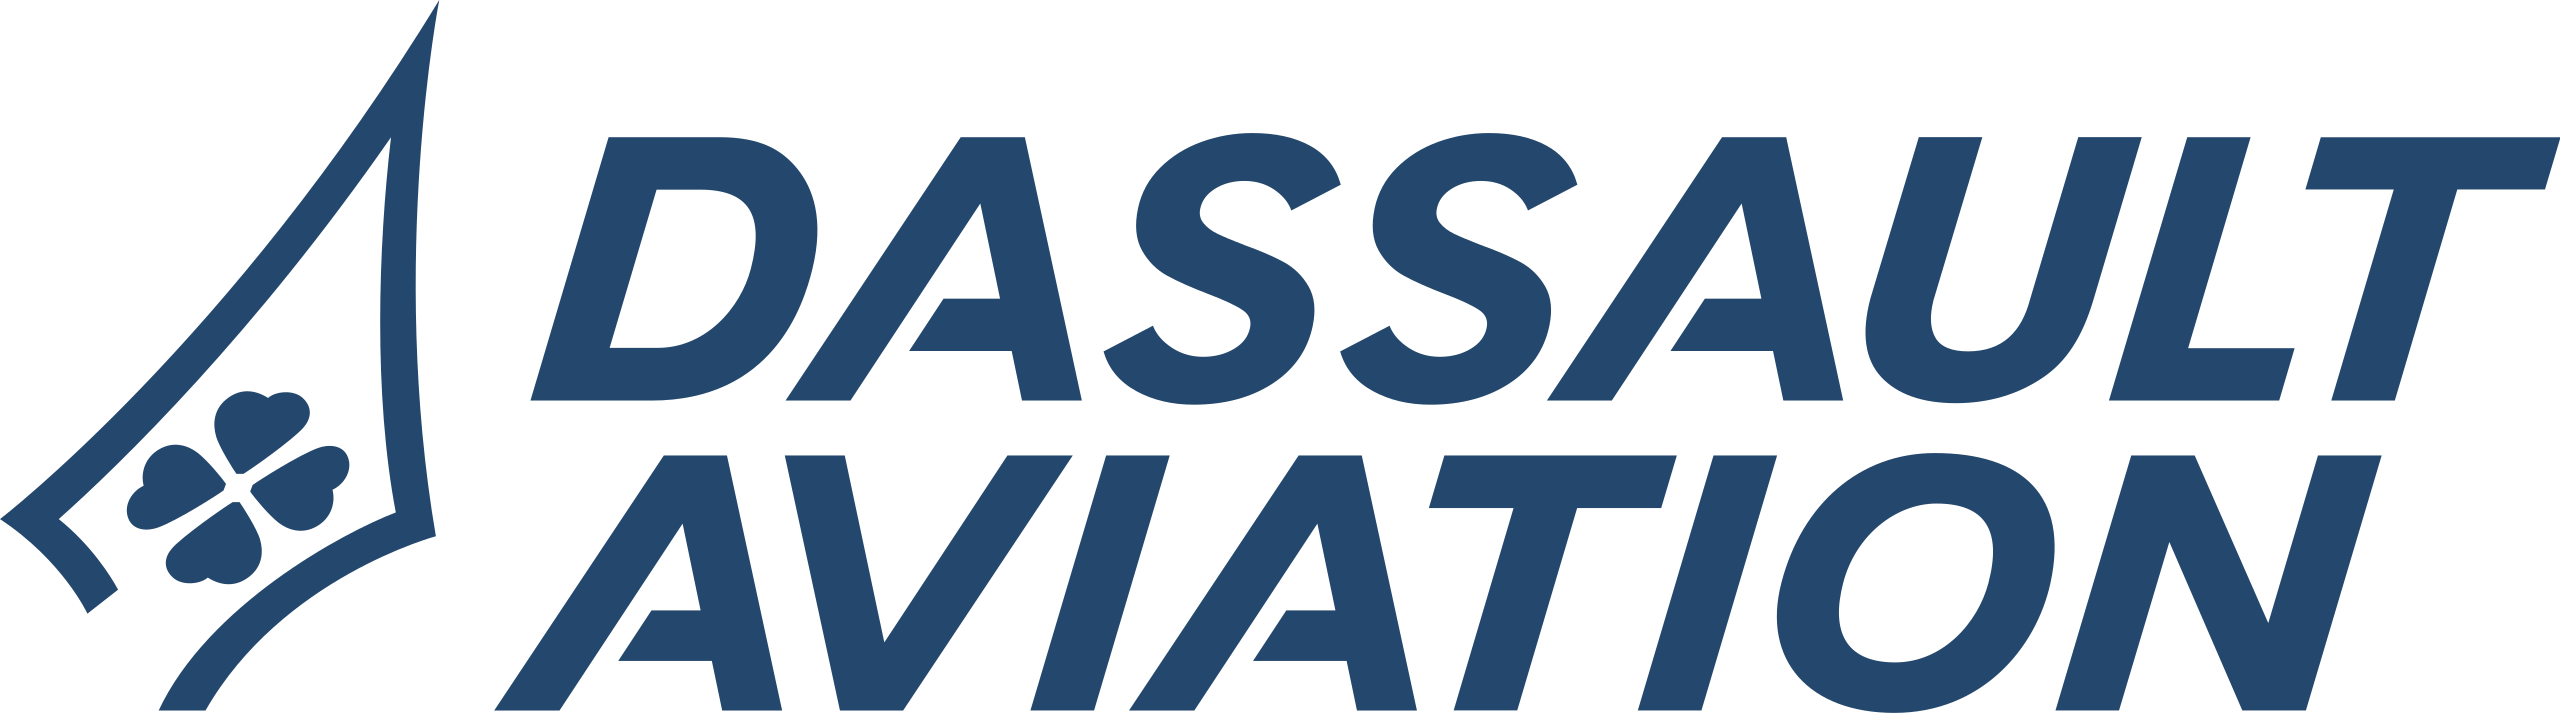 Logo_Dassault_Aviation_2020-svg.png